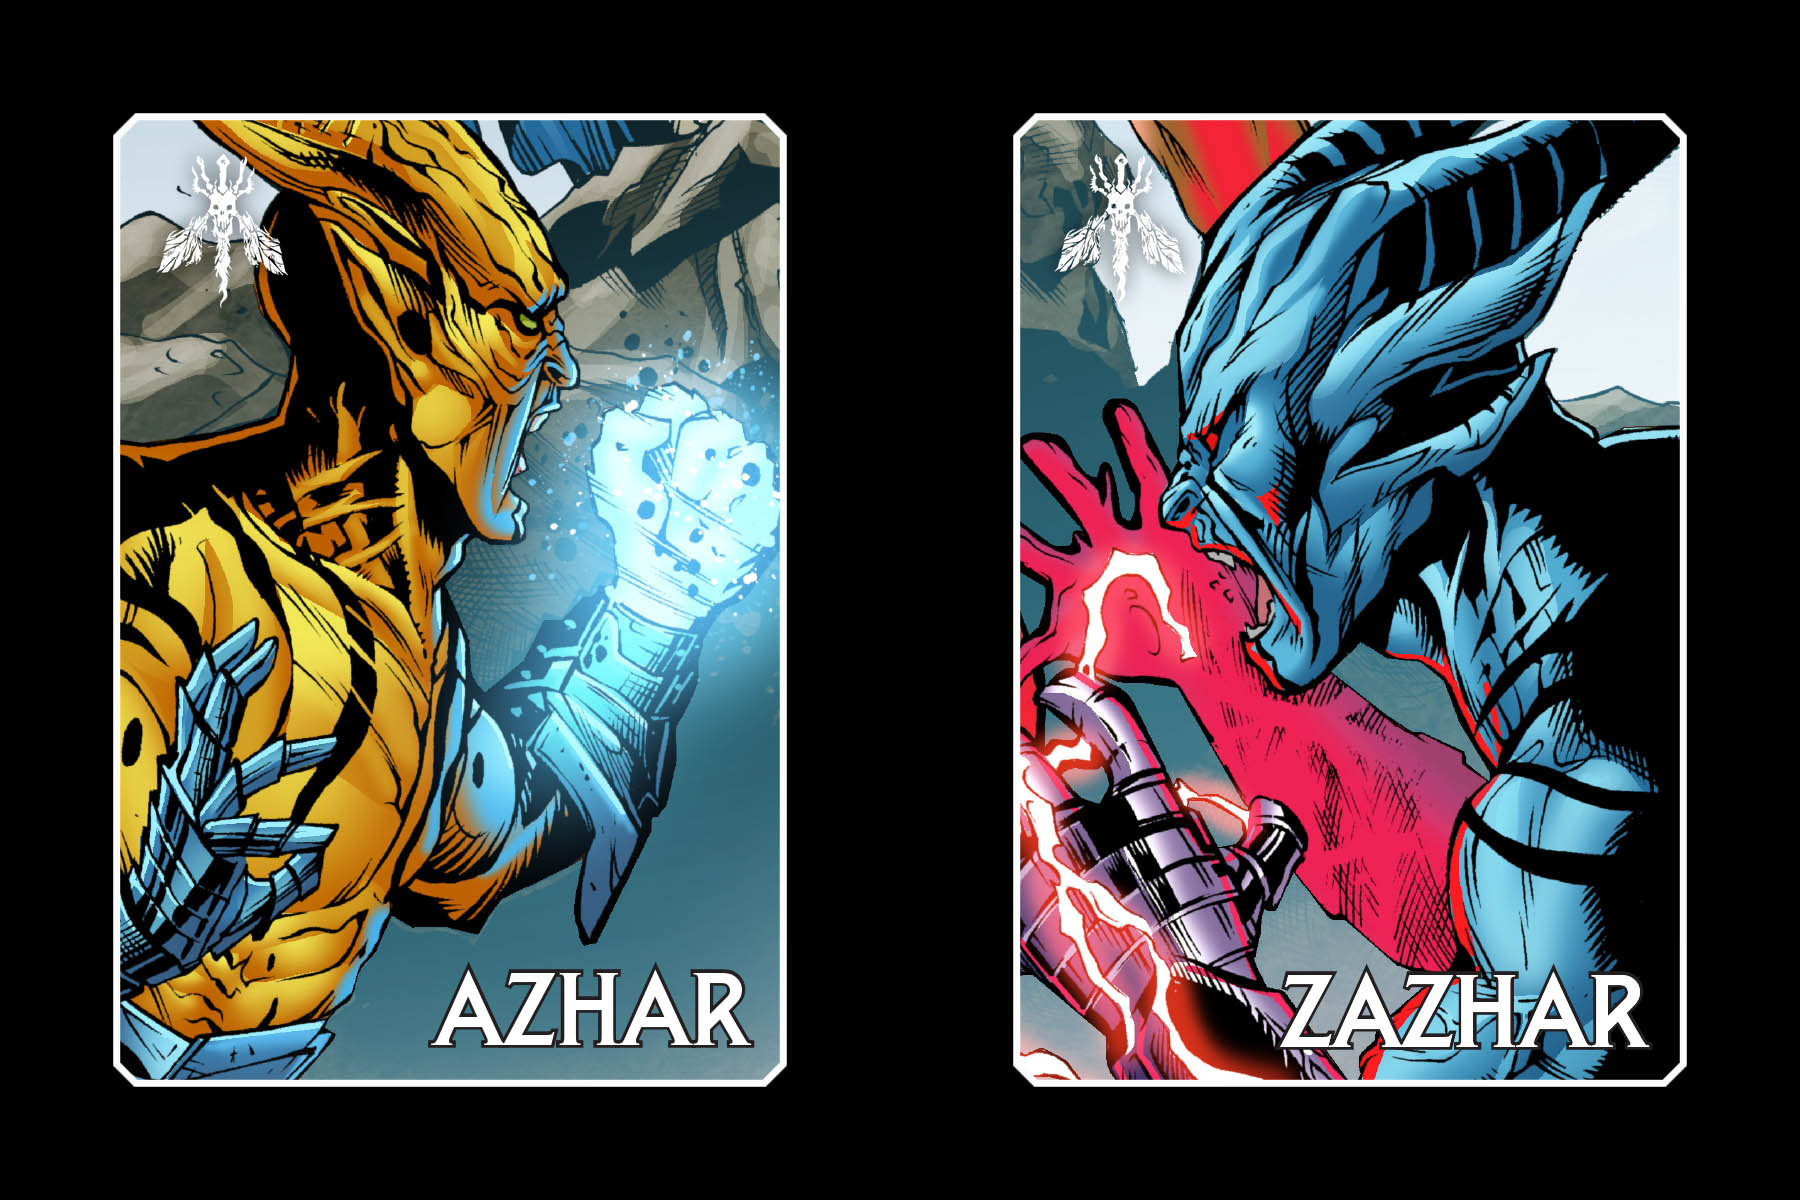 Zazhar and Azhar